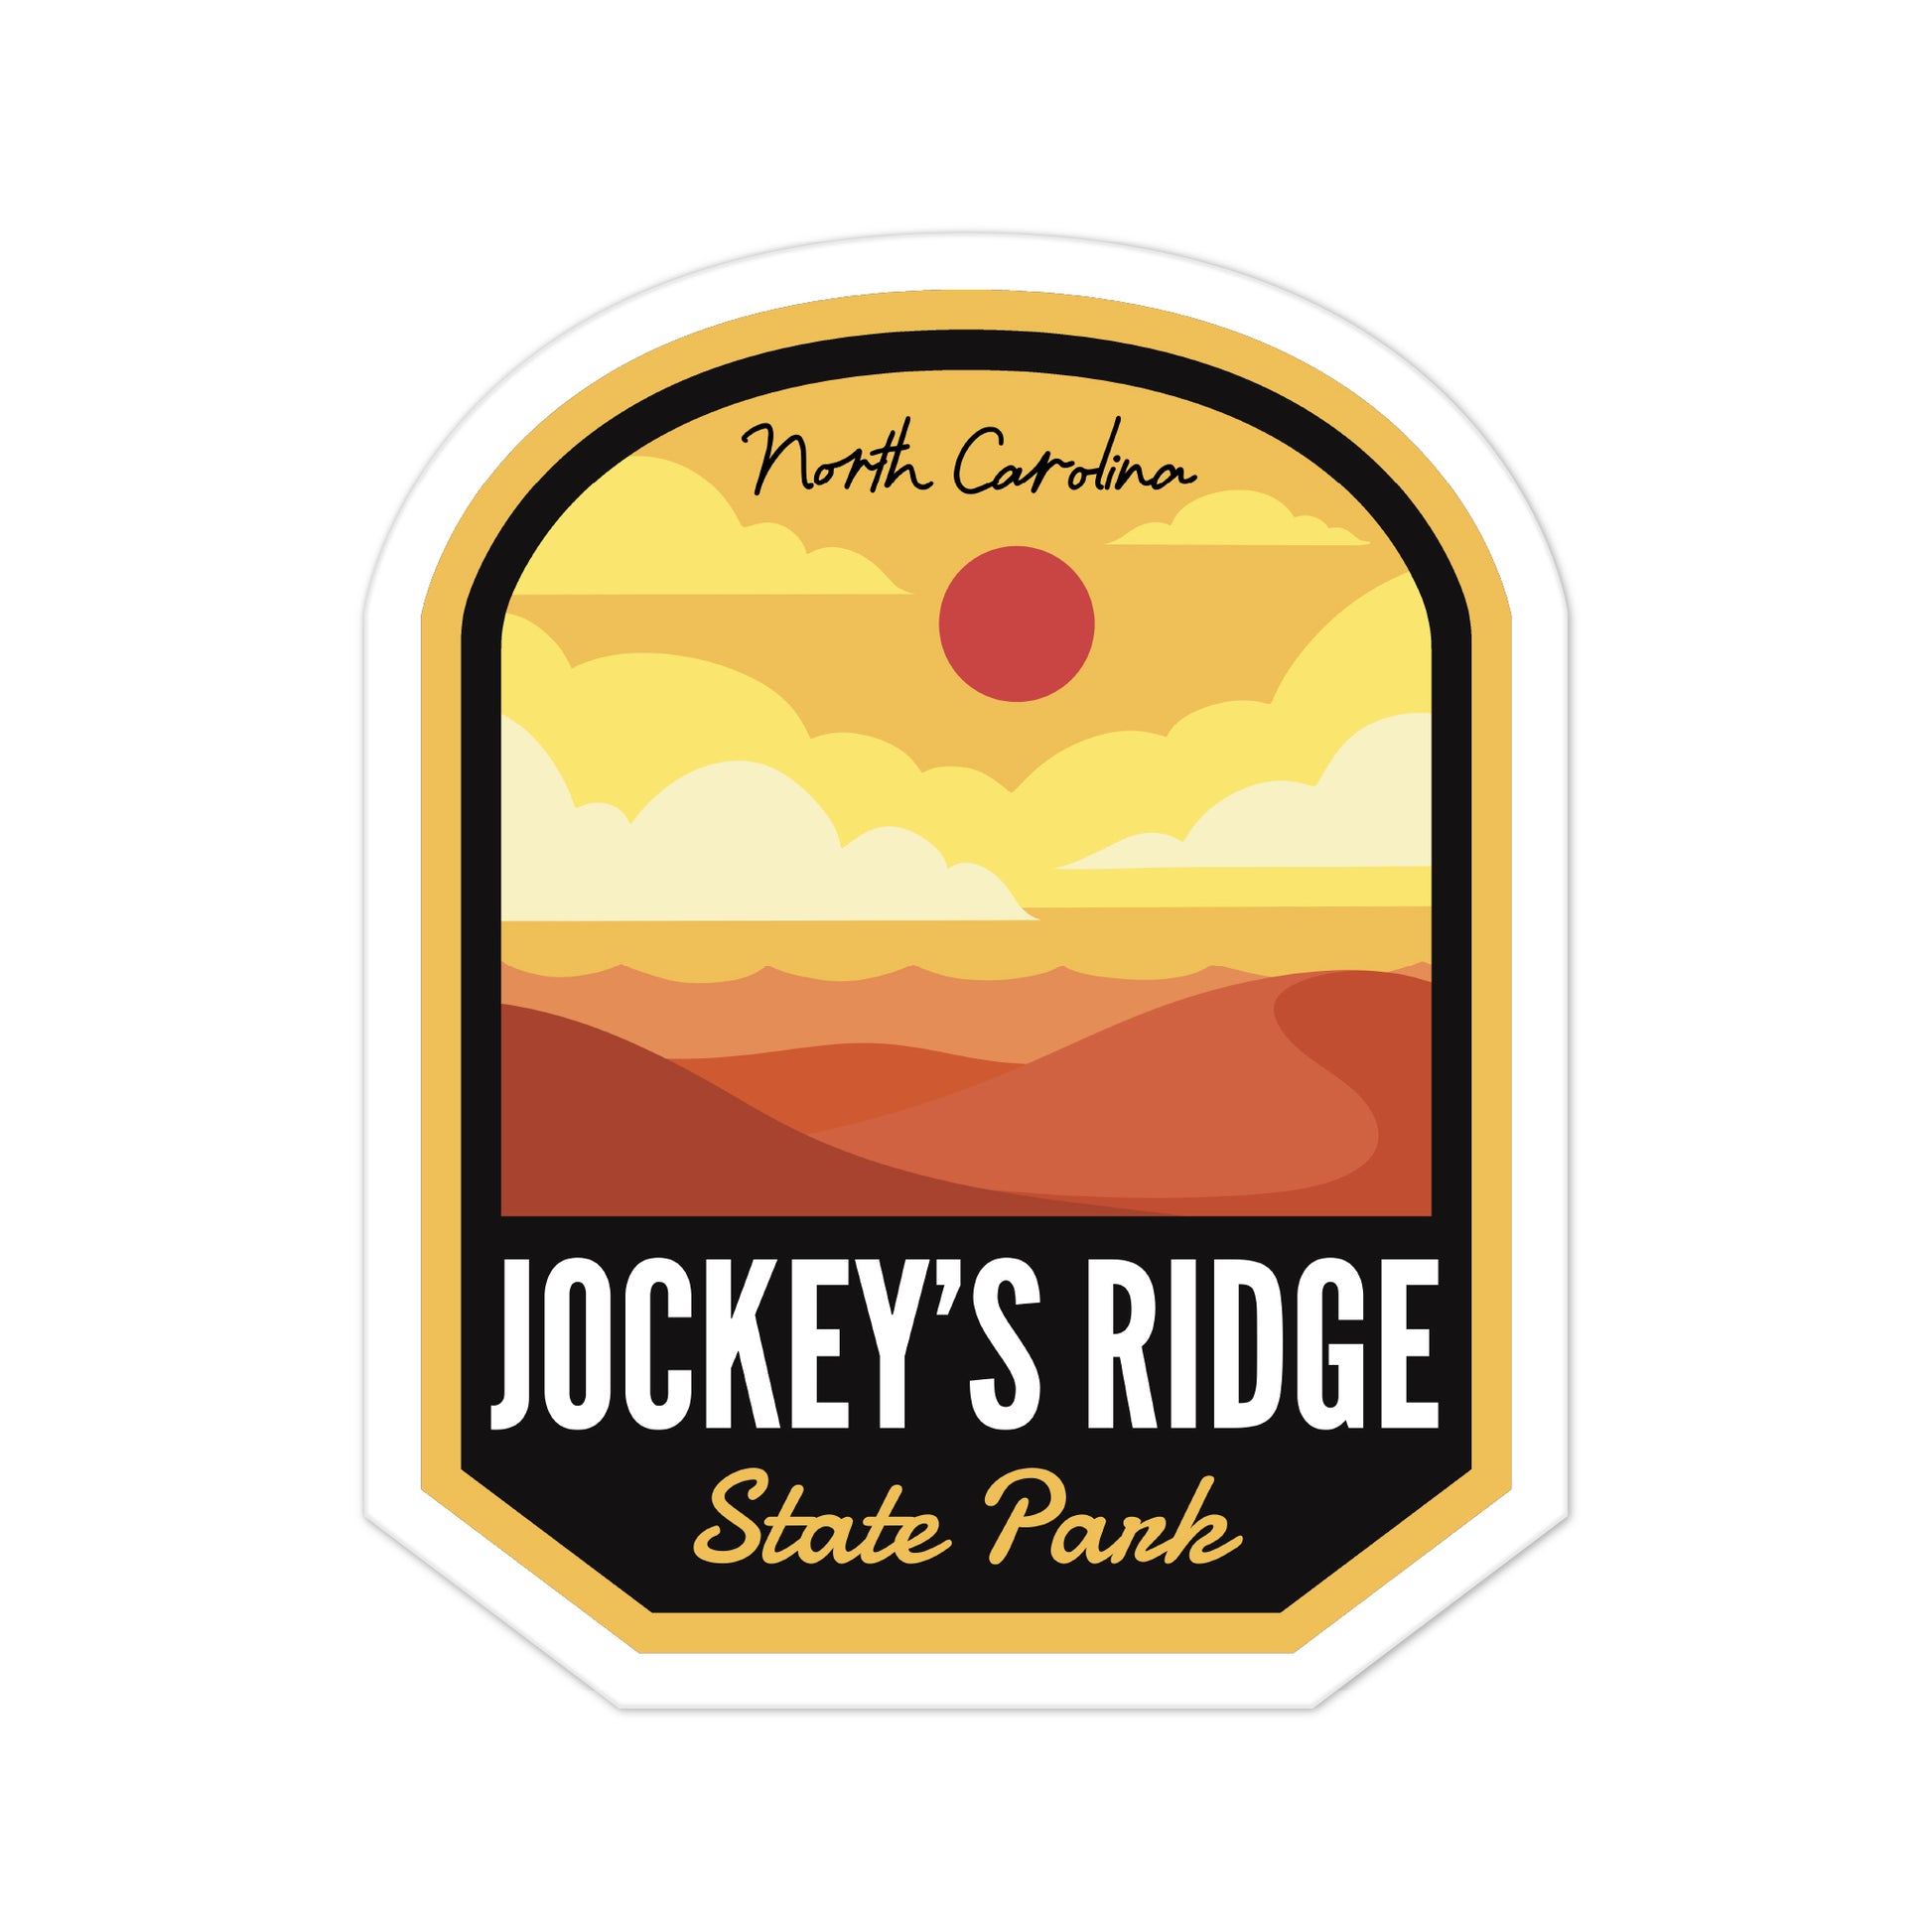 A sticker of Jockey's Ridge State Park